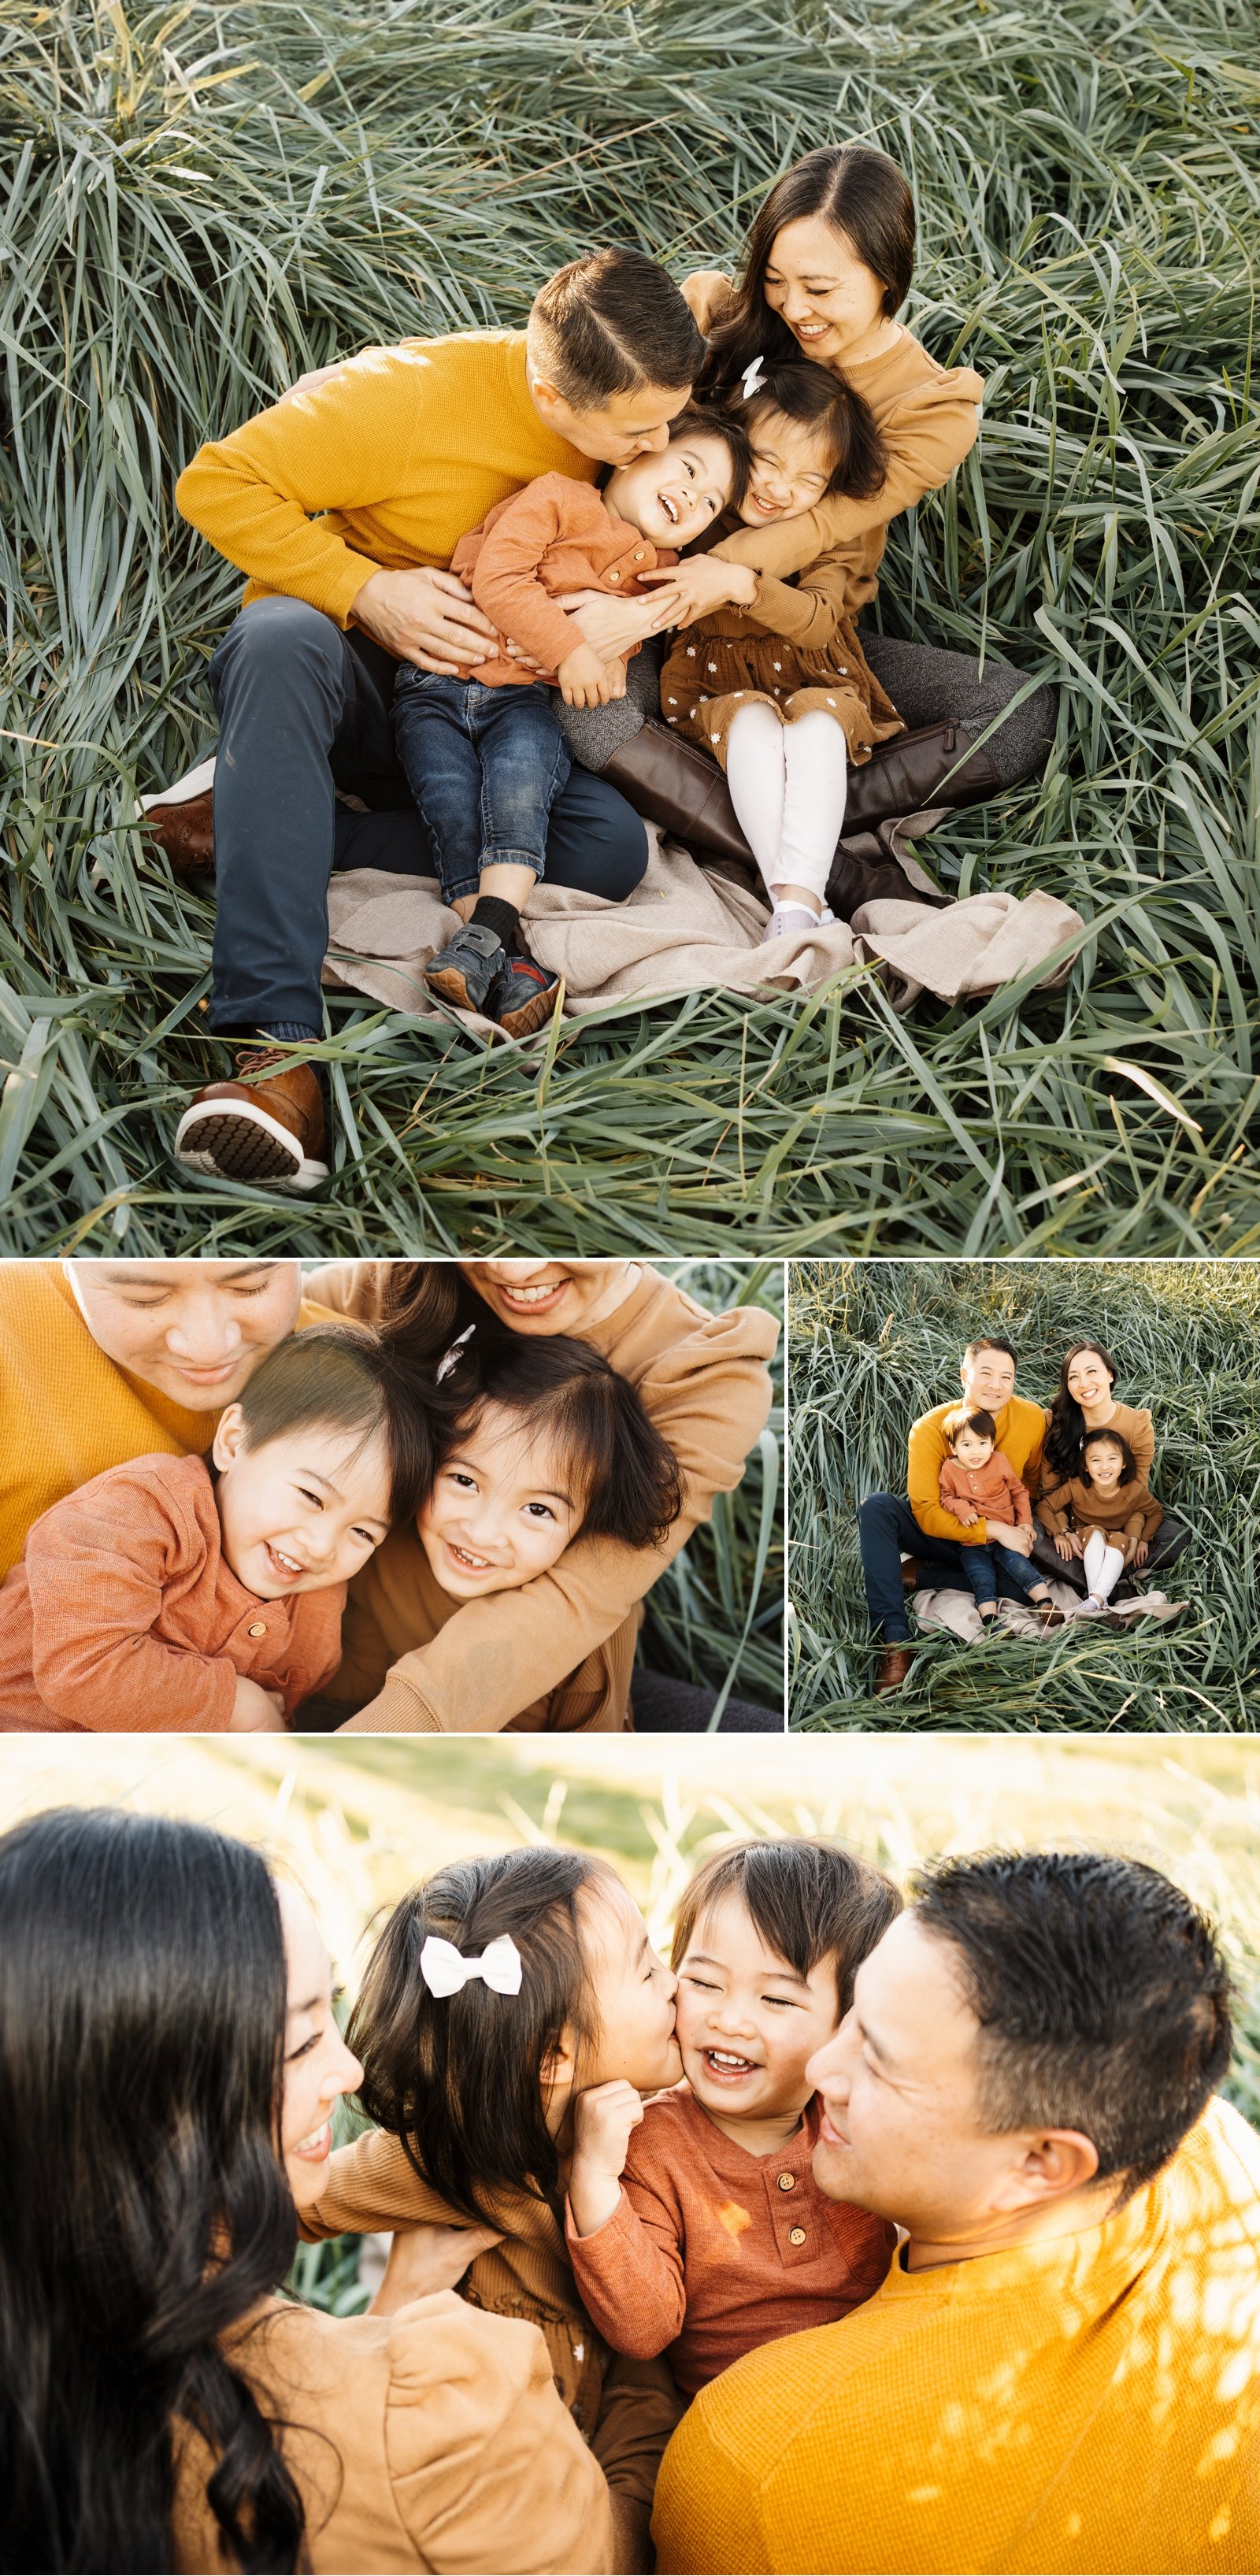 alameda photographer lifestyle family photoshoot at waterfront park 1.jpg